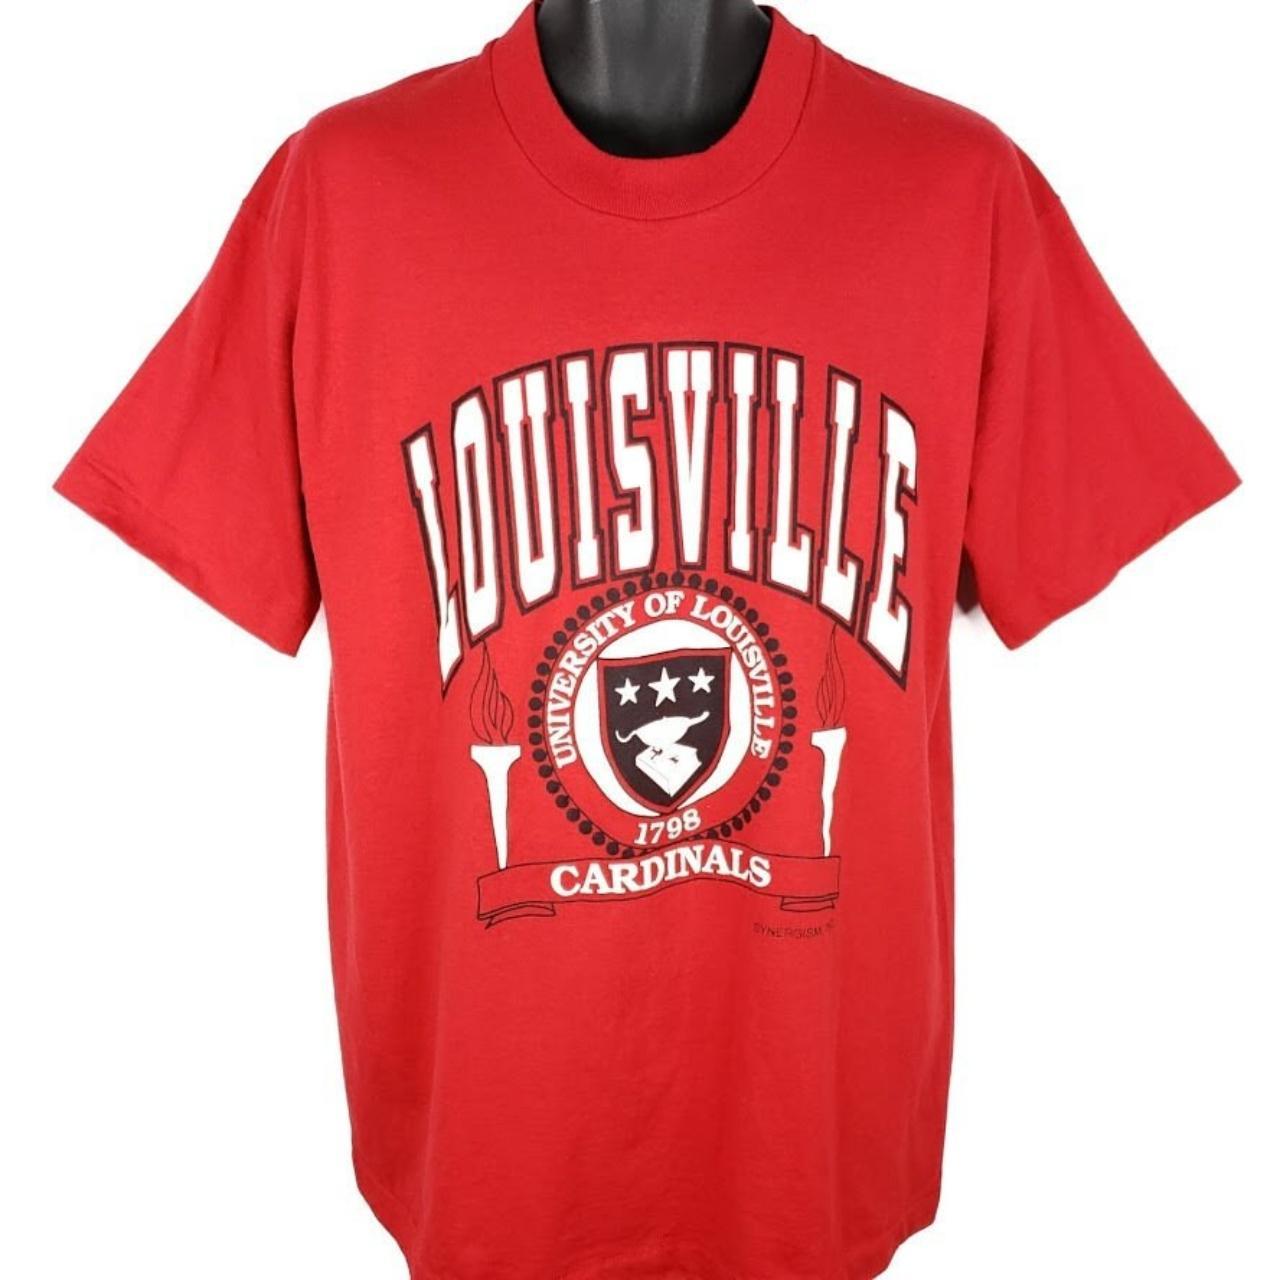 Vintage Louisville Cardinals Sweatshirt Mens XL Red Crewneck 90's USA Made